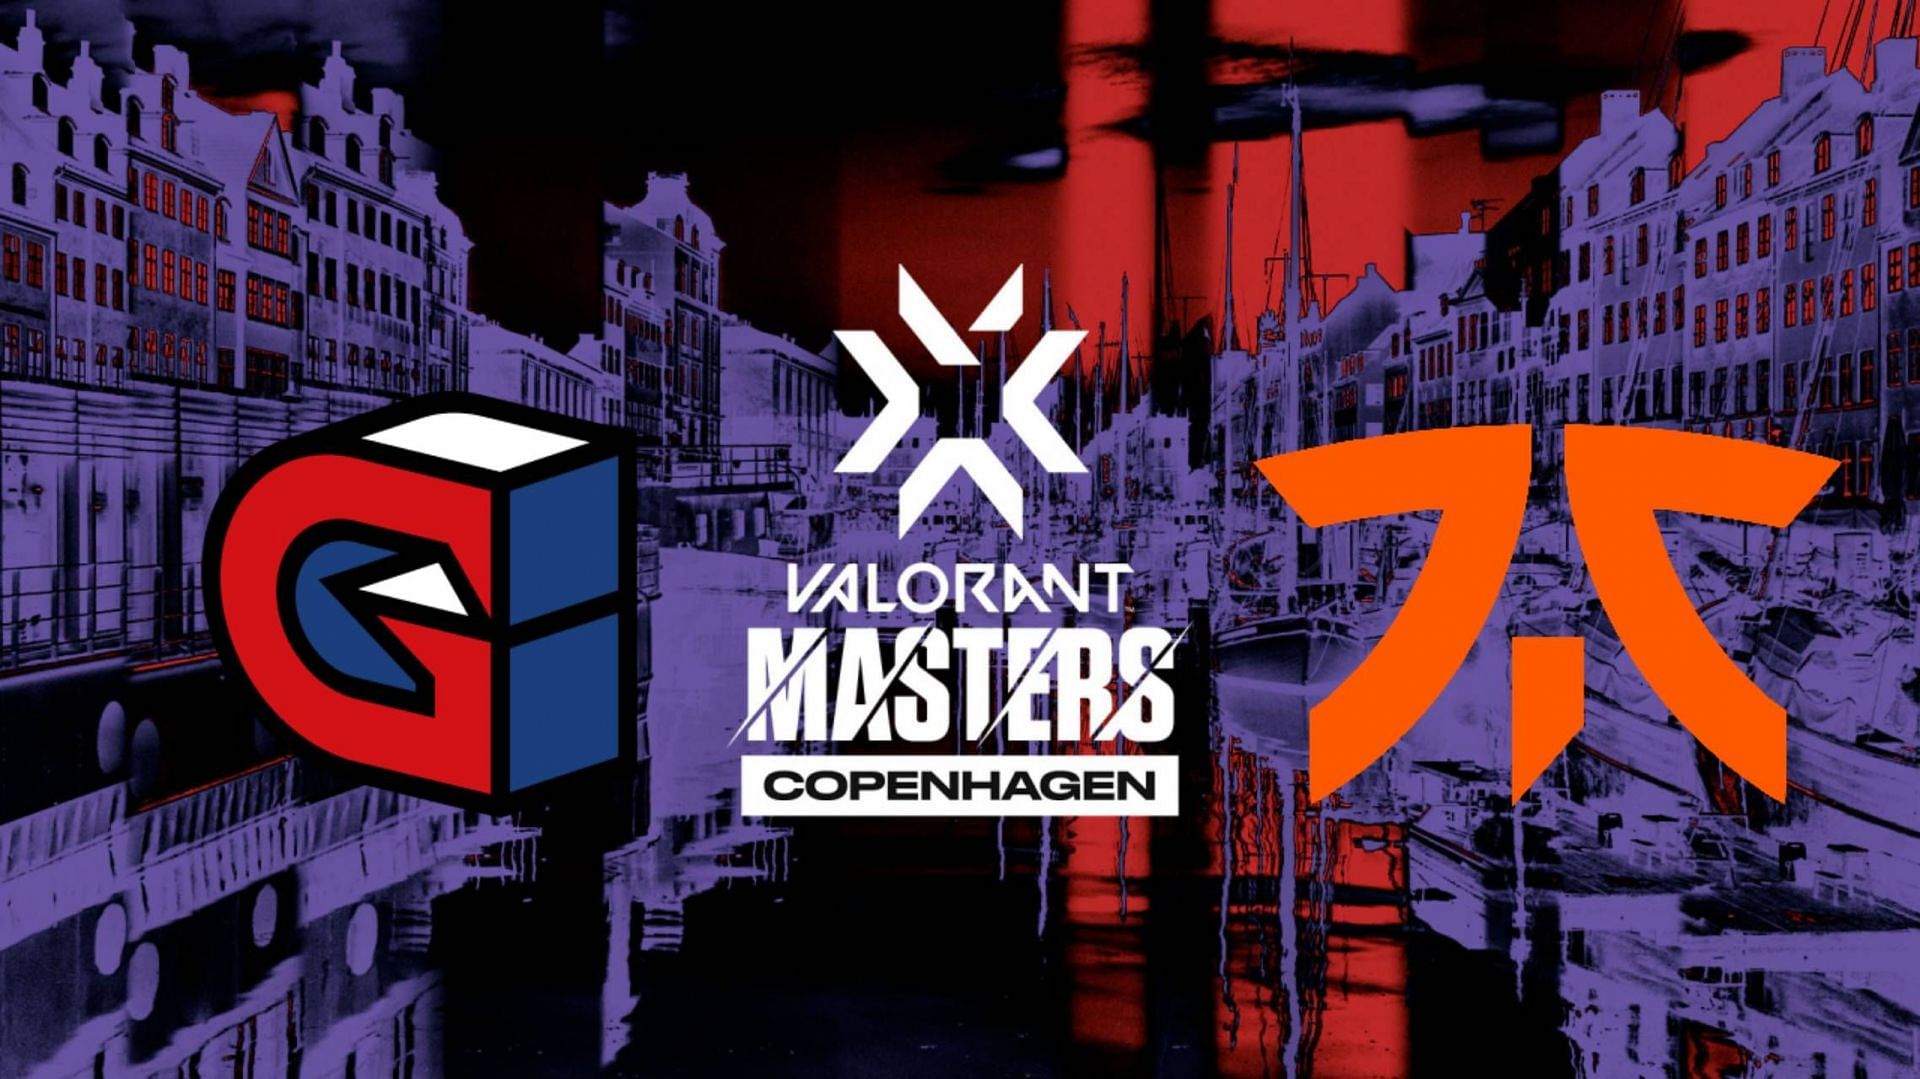 Guild Esports and Fnatic qualify for Copenhagen Masters (Image via Sportskeeda)